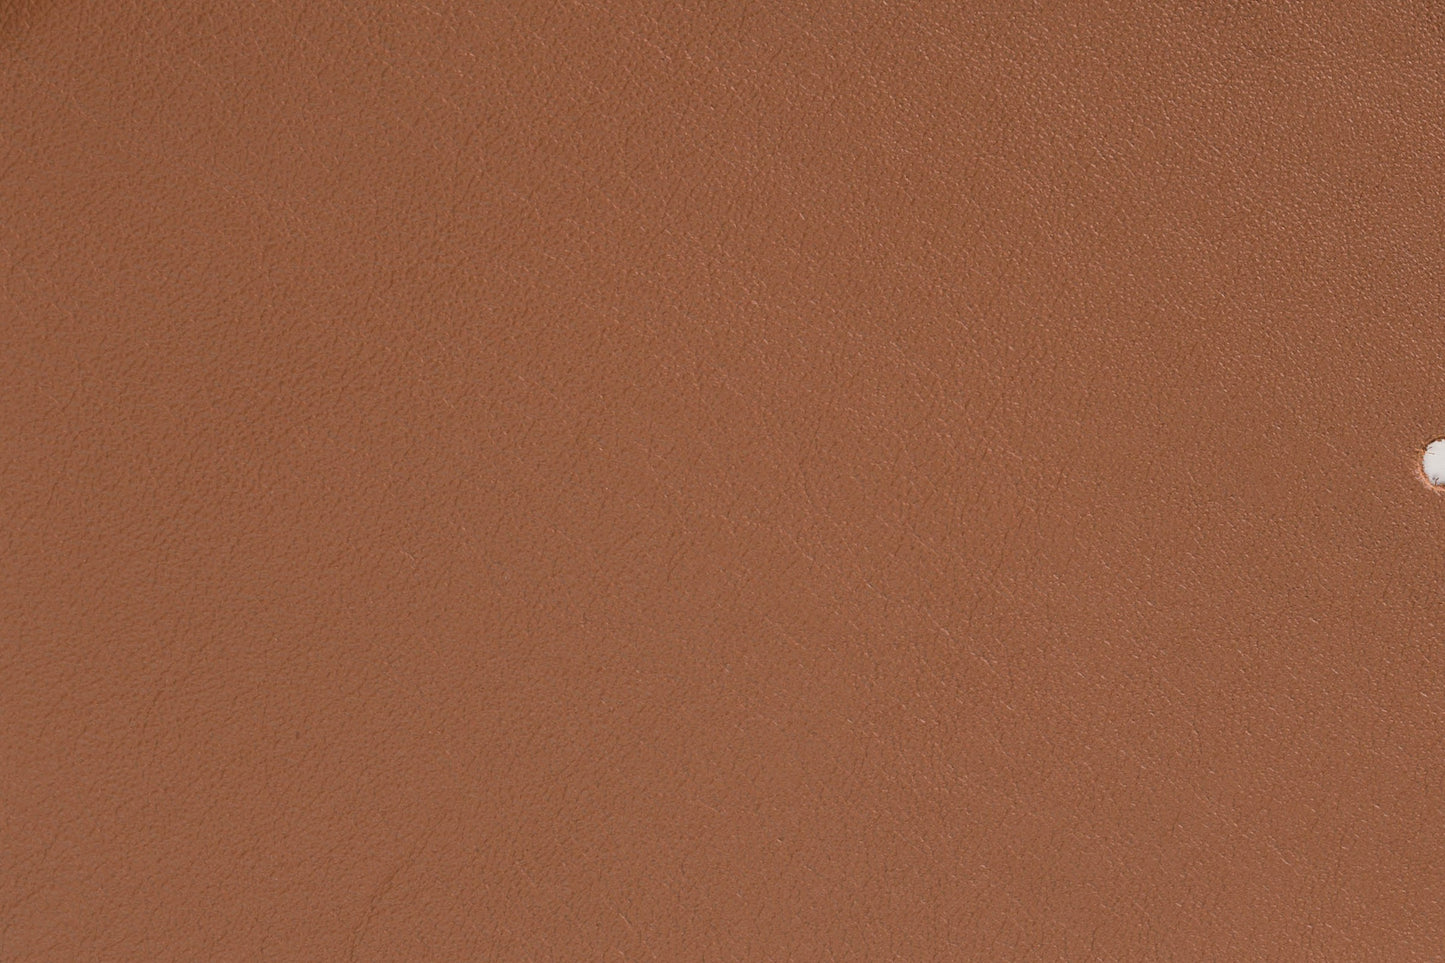 Elmosoft 33004 Brown leather